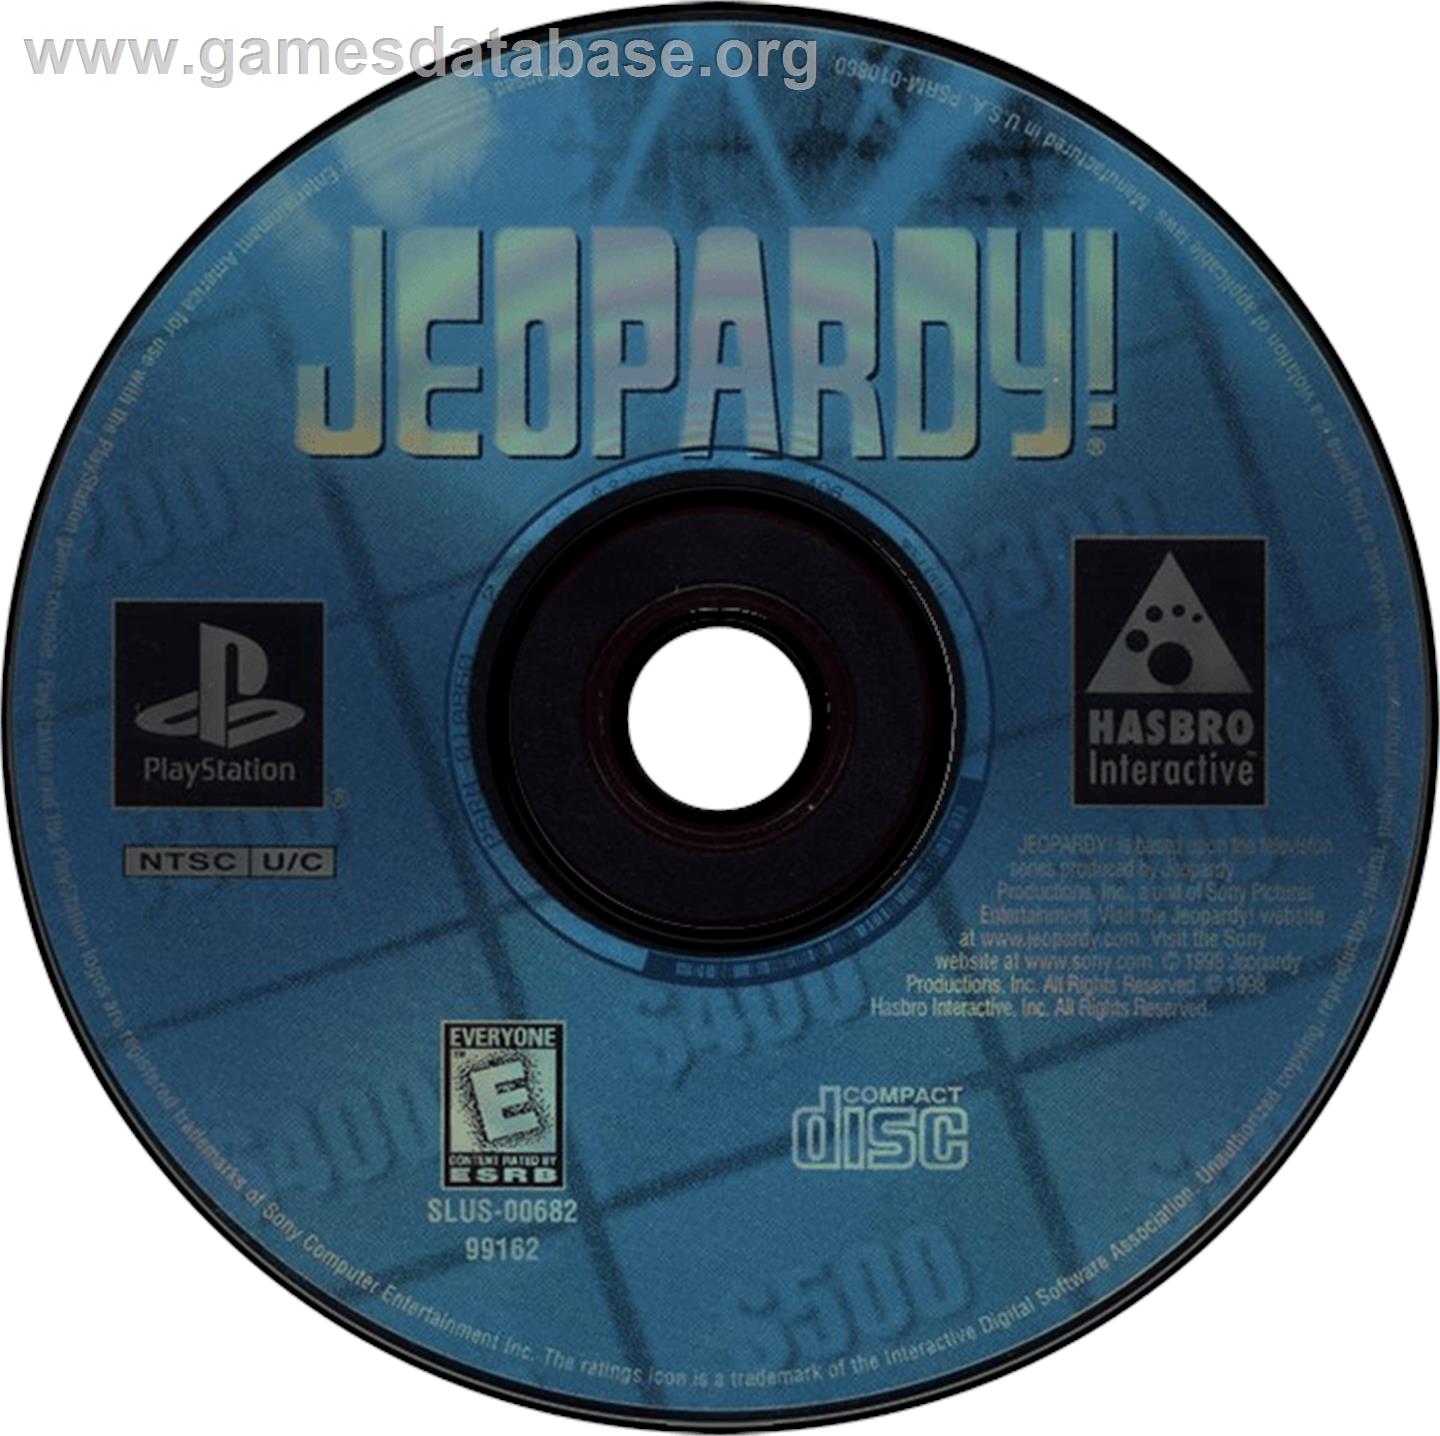 Jeopardy! - Sony Playstation - Artwork - Disc